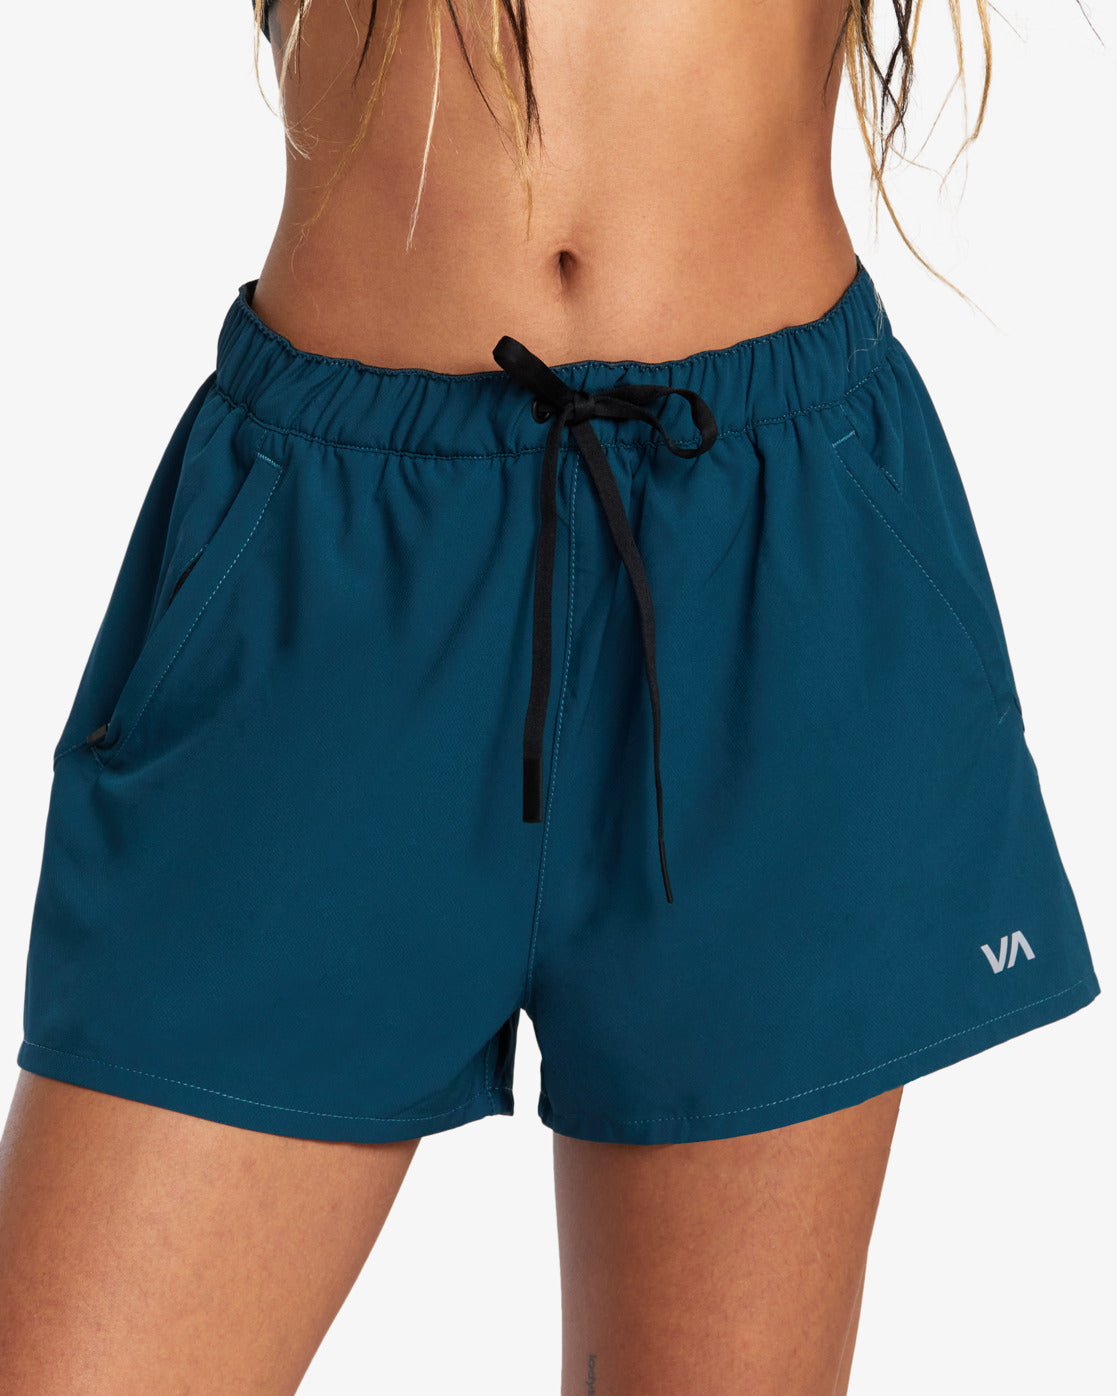 VA Sport Essential Yogger 12 - Performance Shorts for Women